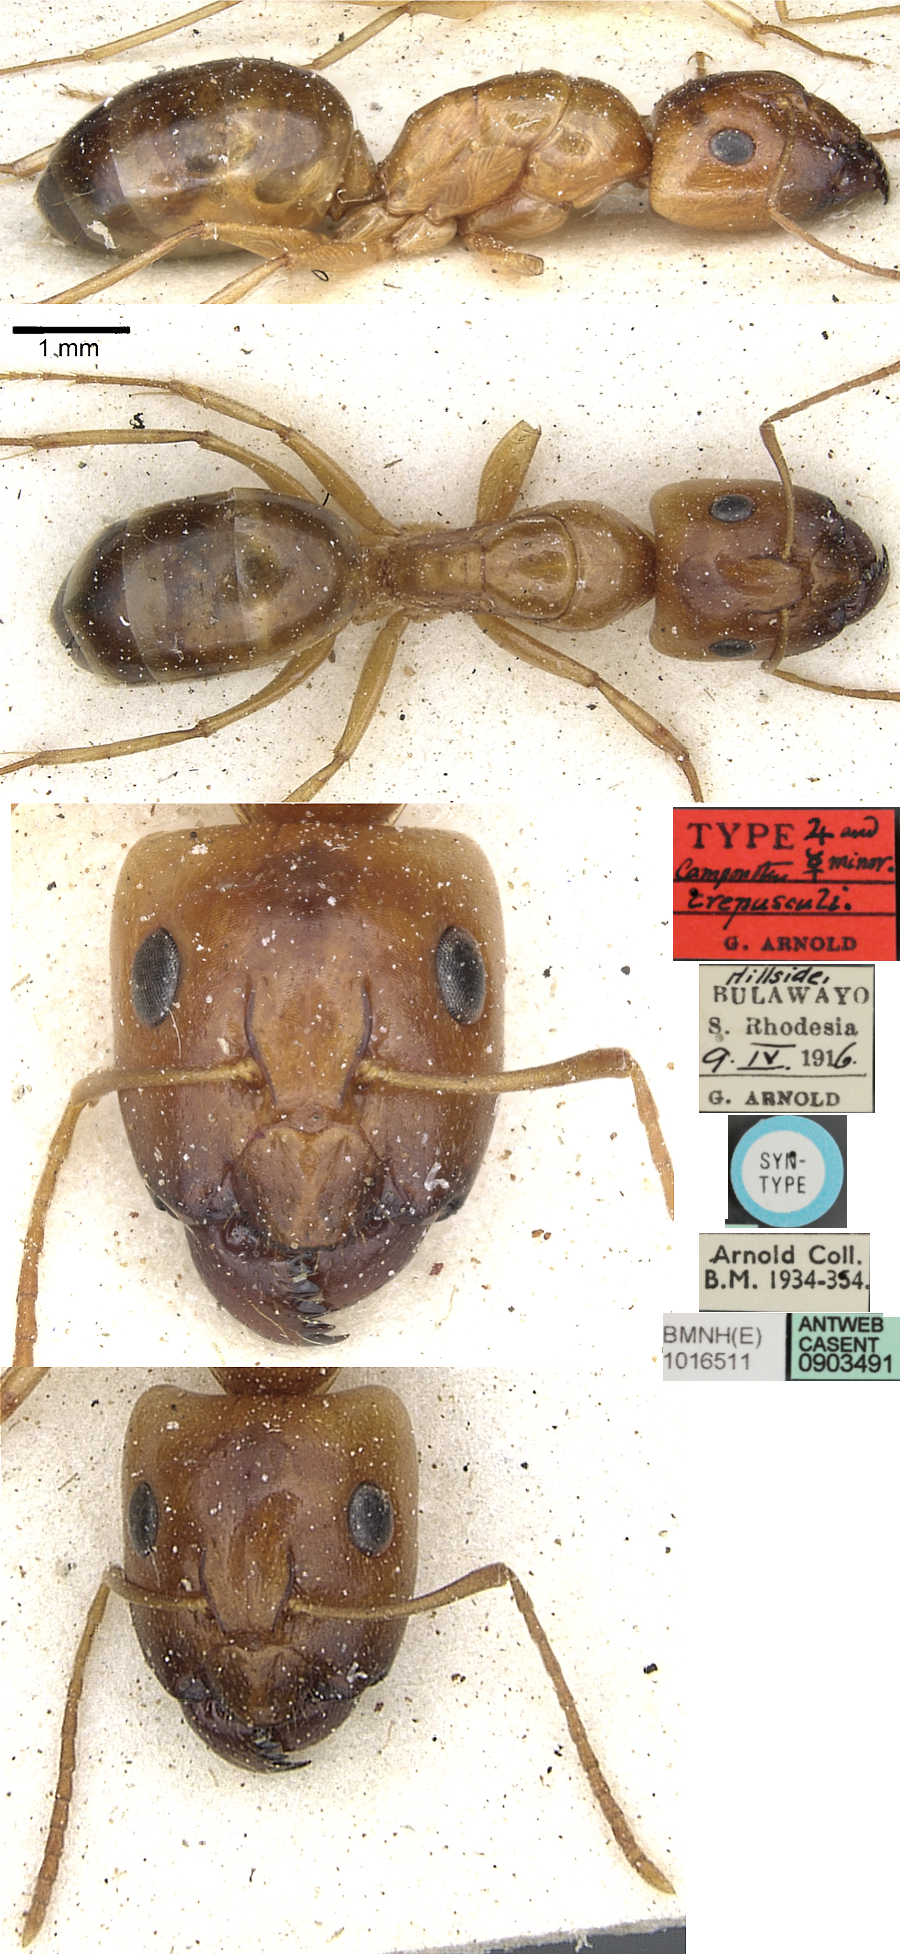 {Camponotus crepusculi major}